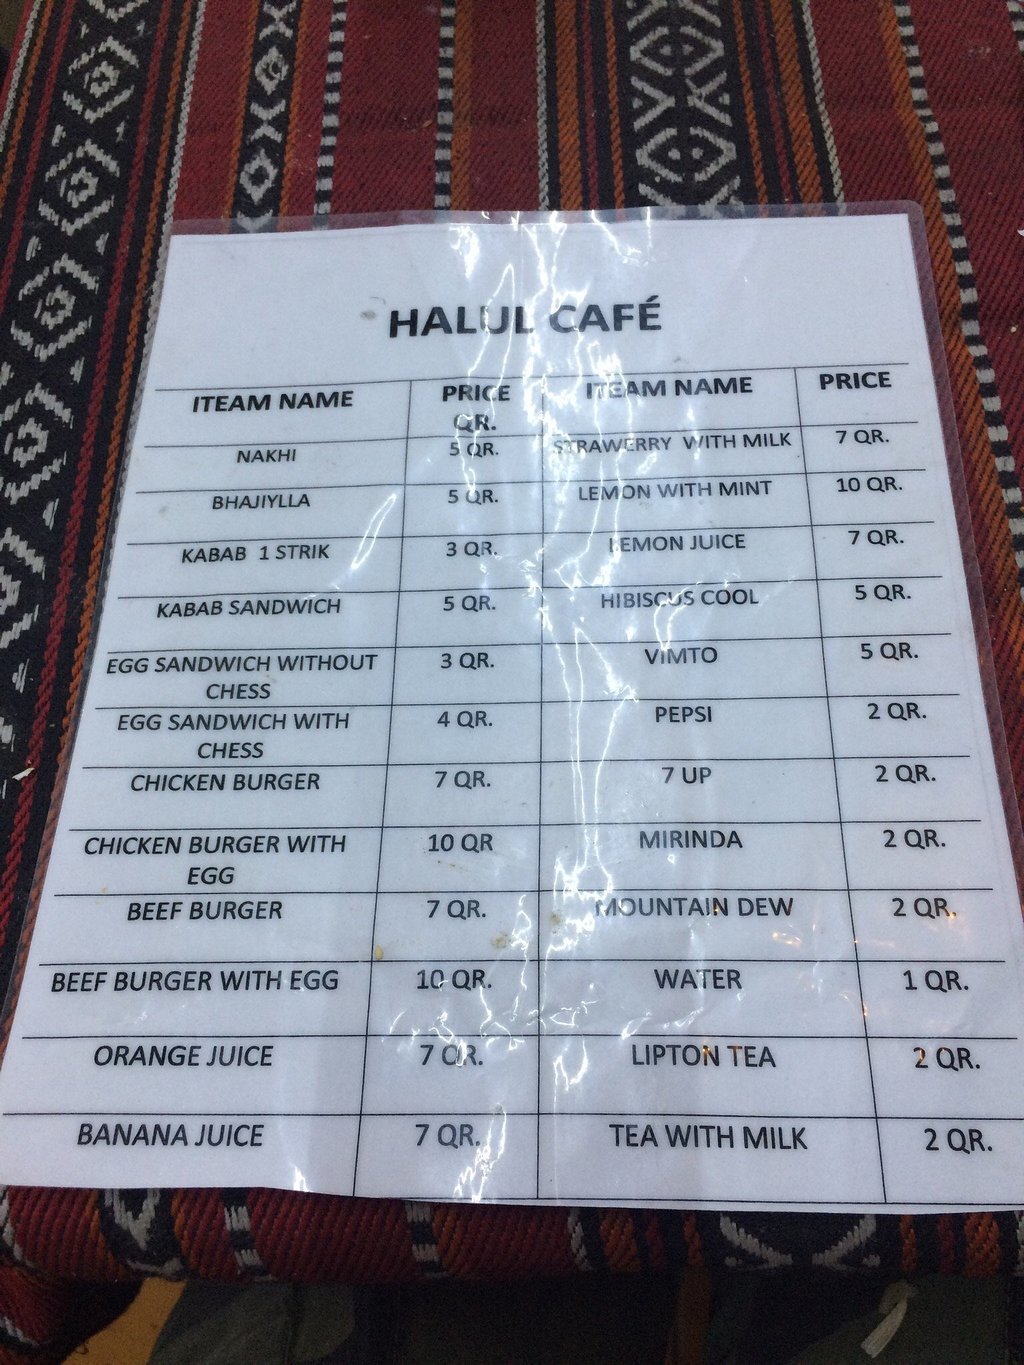 Halul Cafe